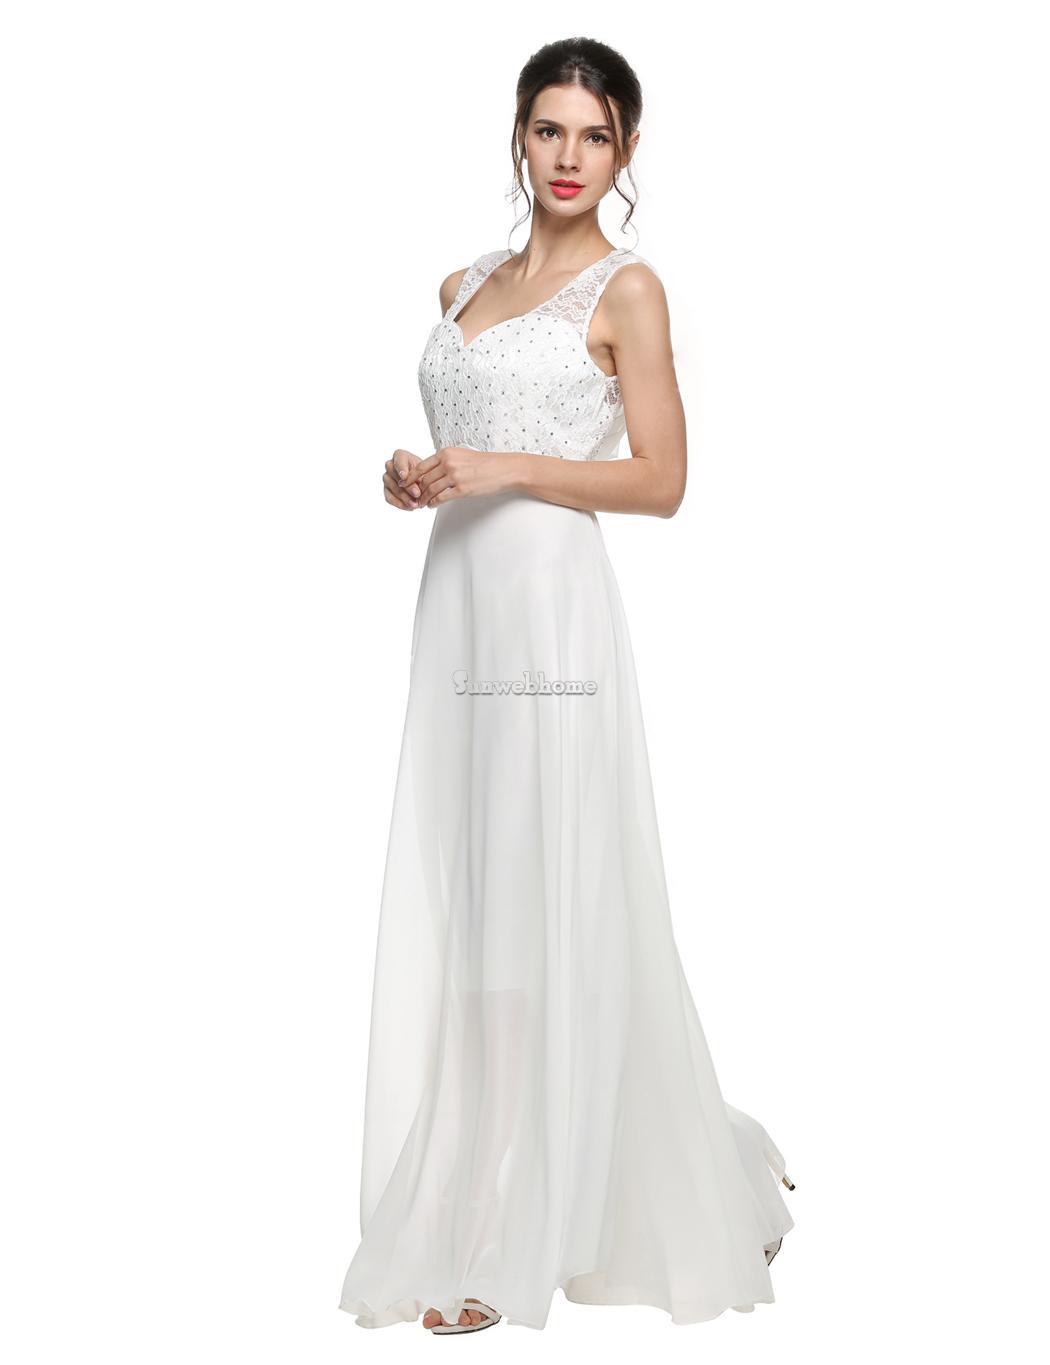 New white ivory Backless mermaid lace Chiffon wedding bridal dress Gown ...